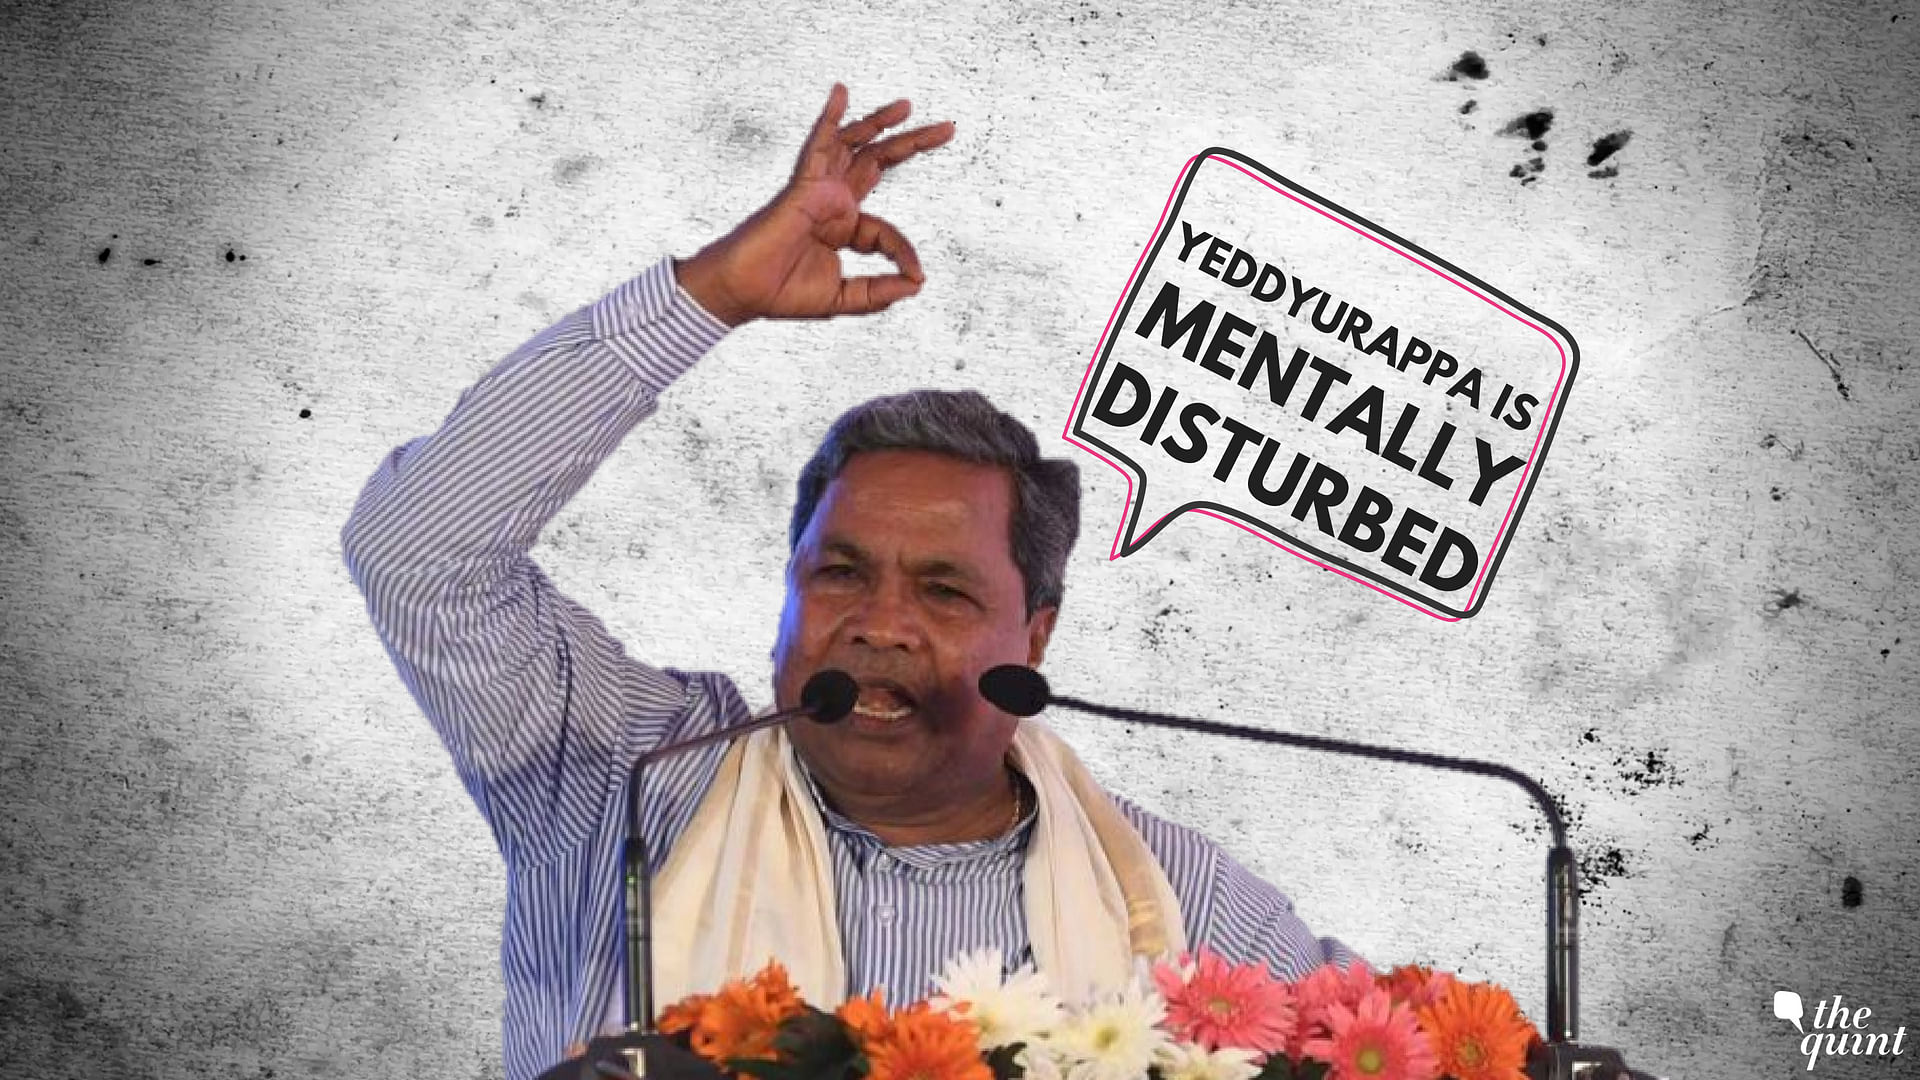 Karanataka CM Siddaramaiah repeatedly called BJP leader BS Yeddyurappa “mentally disturbed” while interacting with mediapersons on 12 May, polling day.